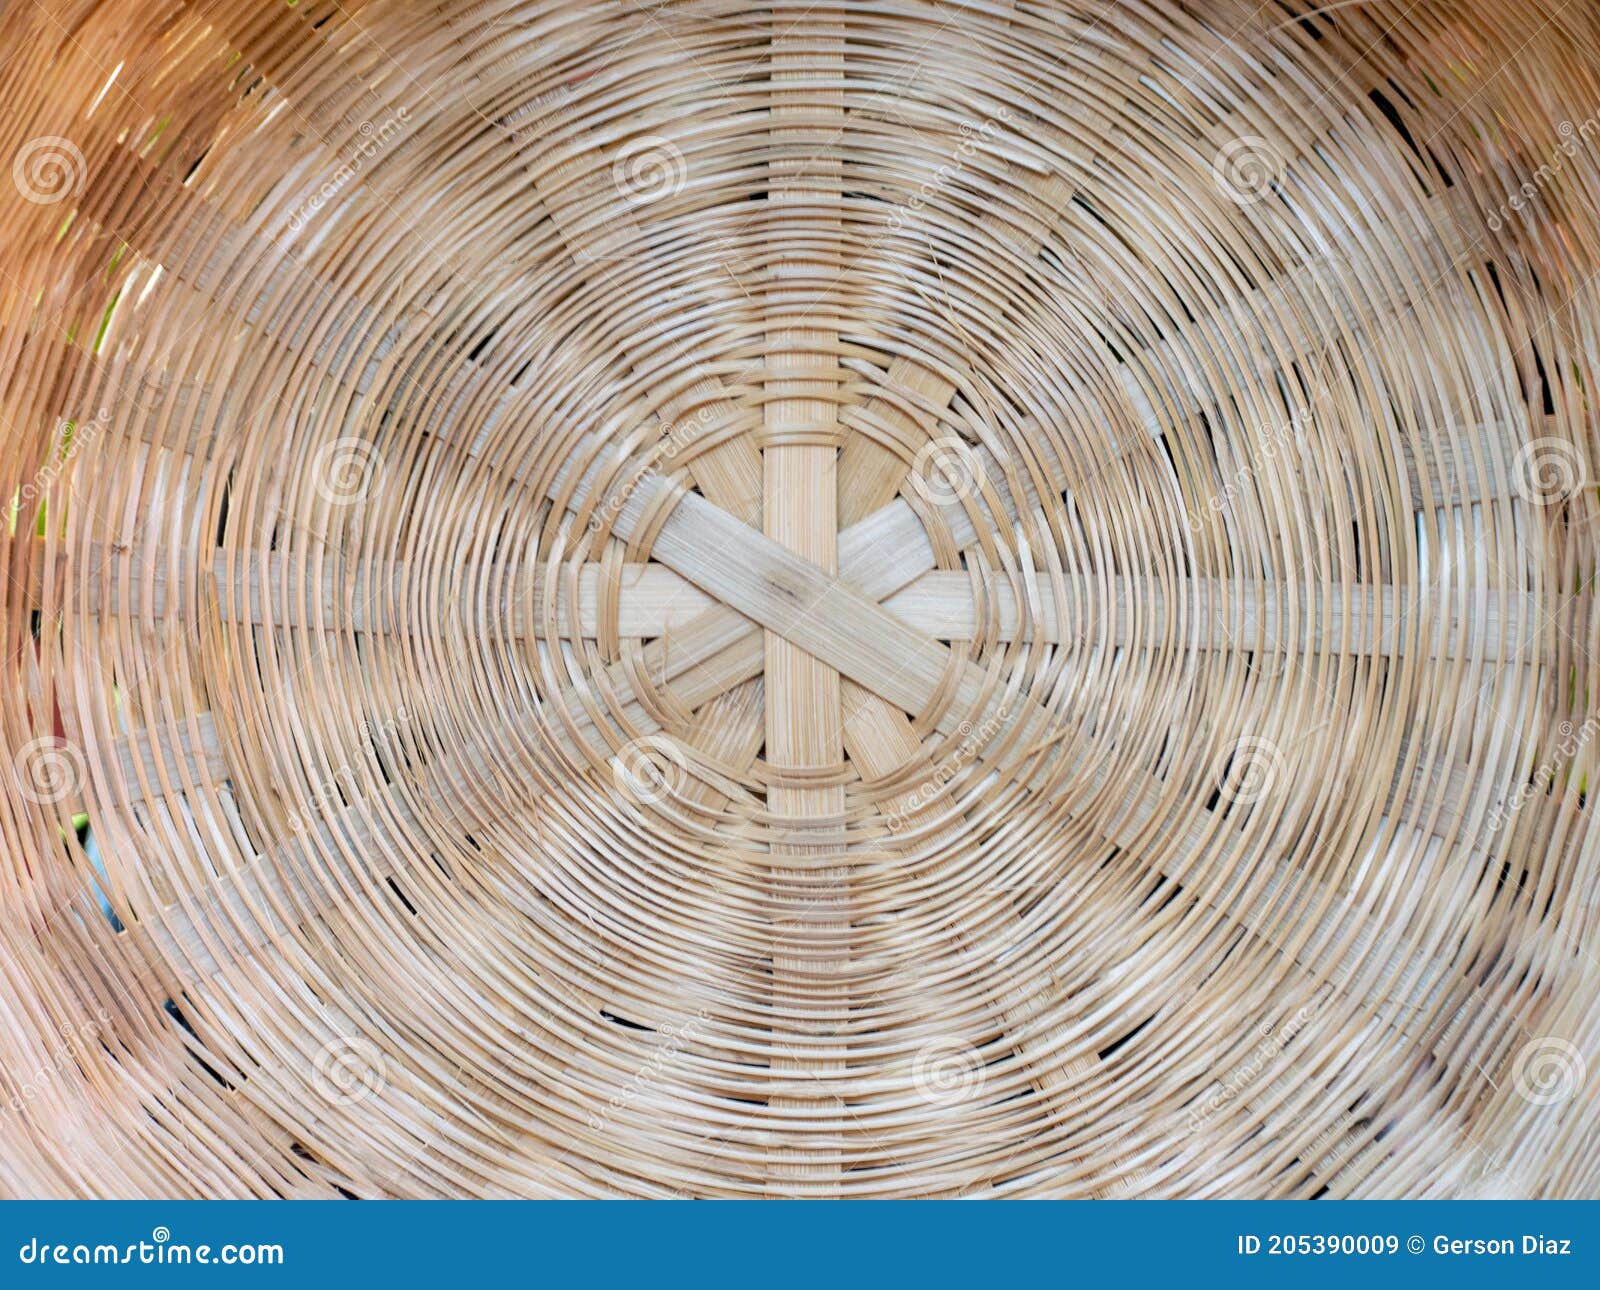 inside of a bamboo basket